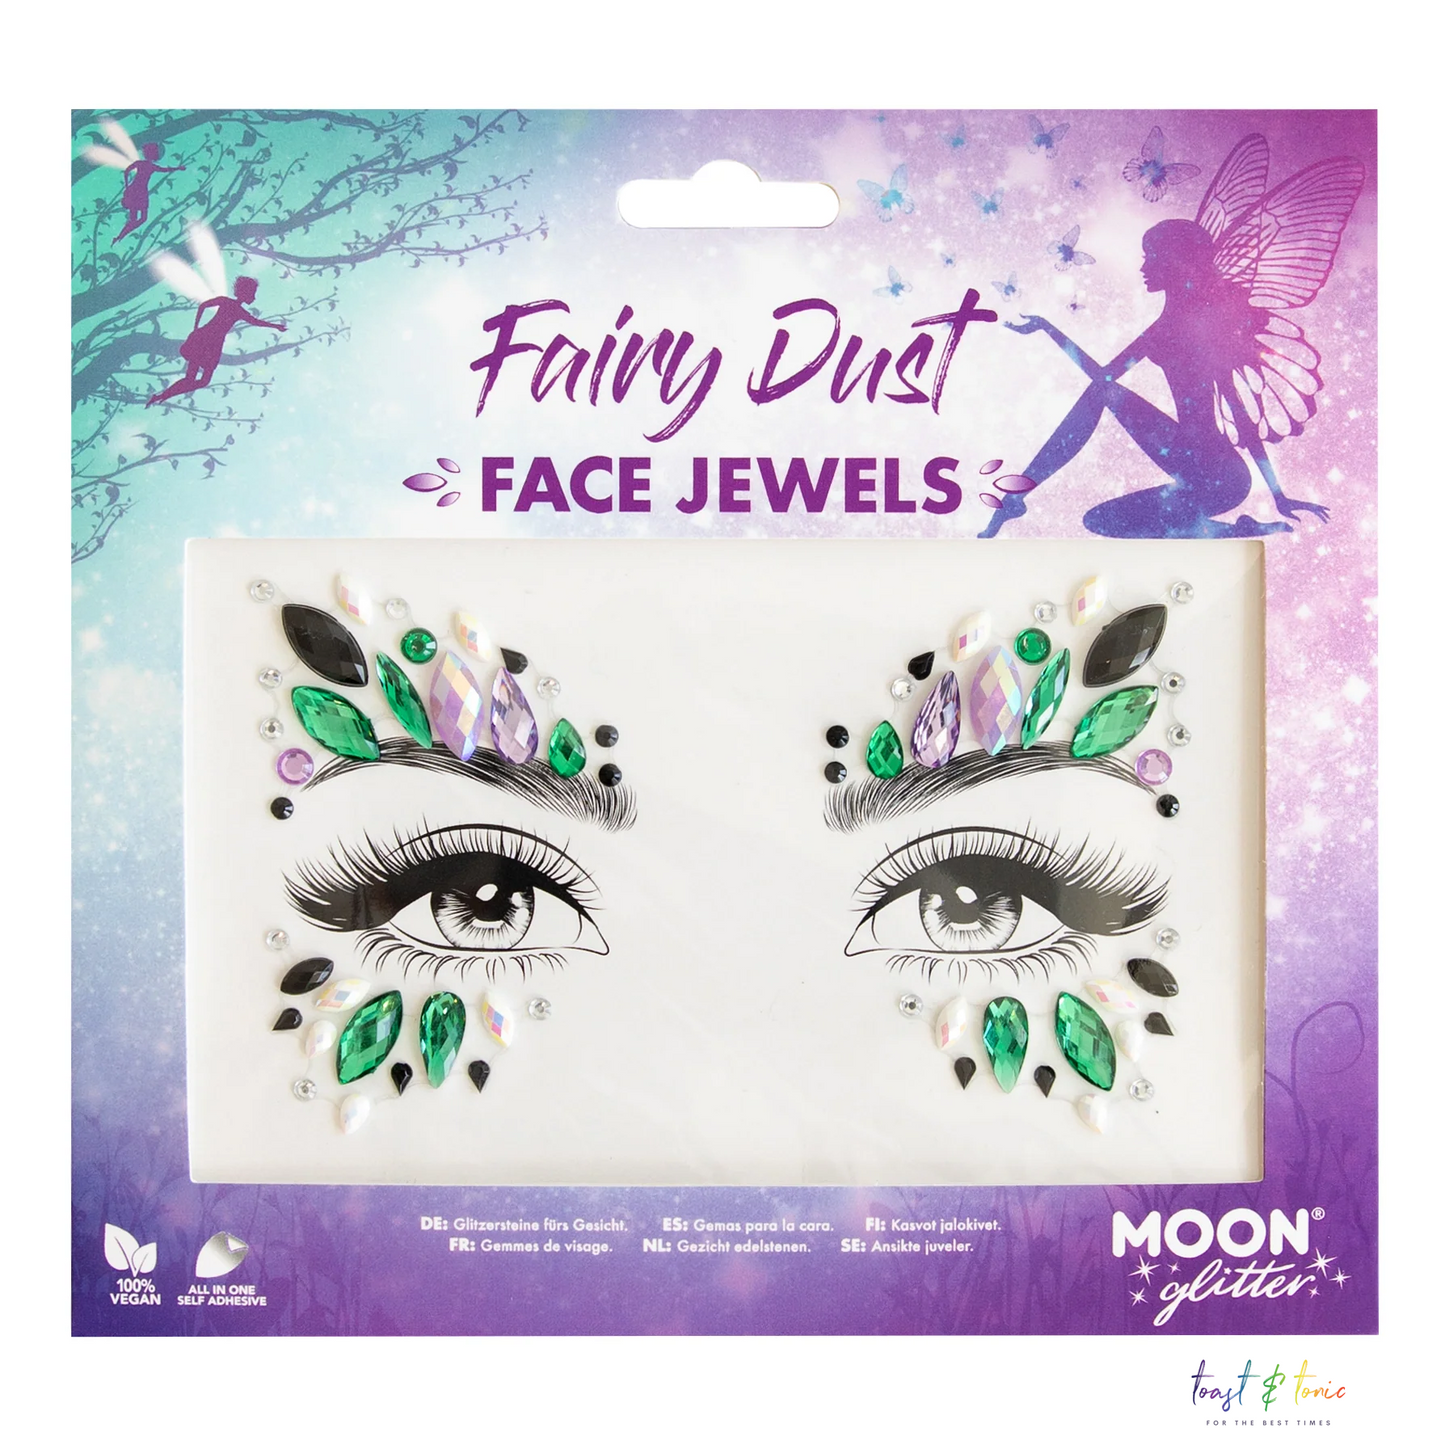 Face Jewels, Face Gems, Fairy Dust, Pink, Green,Black, Clear, Moon Glitter